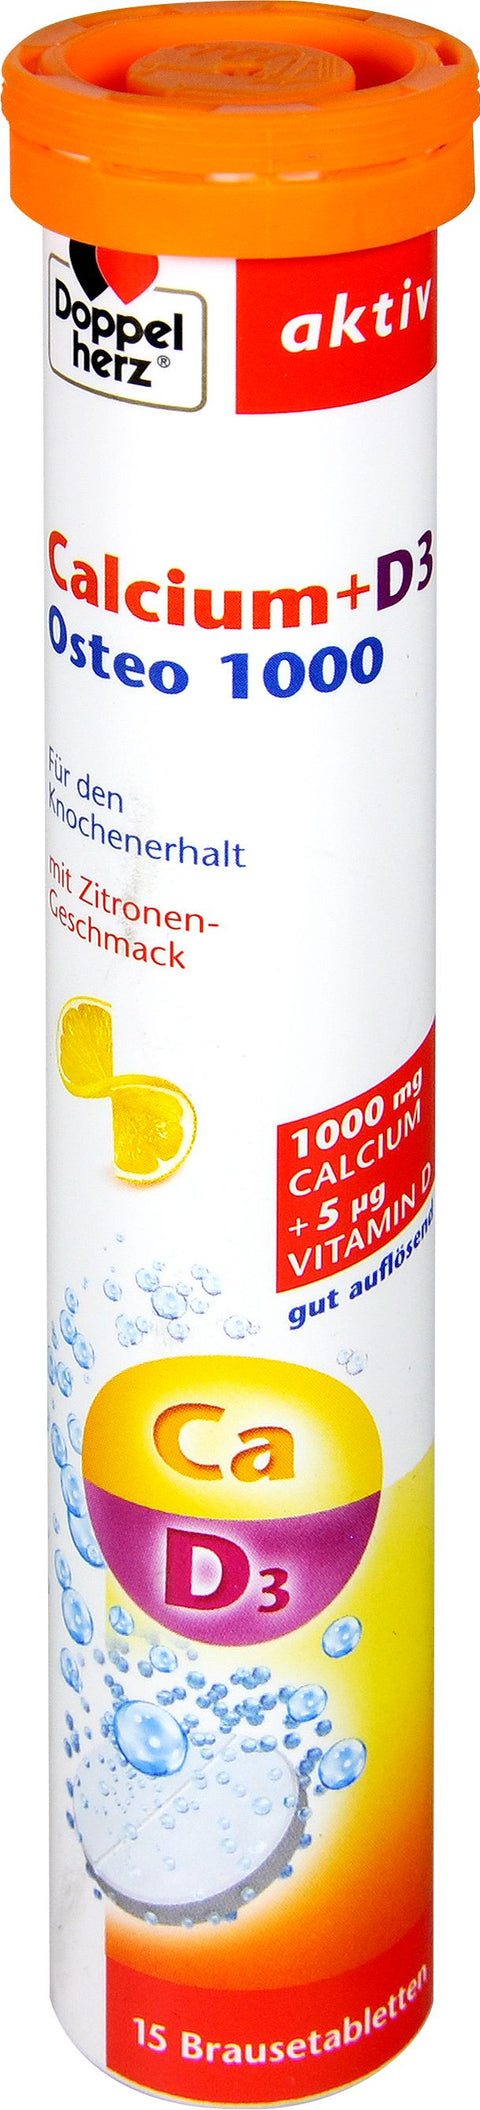   Doppelherz Calcium + D3 Osteo 1000 bester-kauf.ch